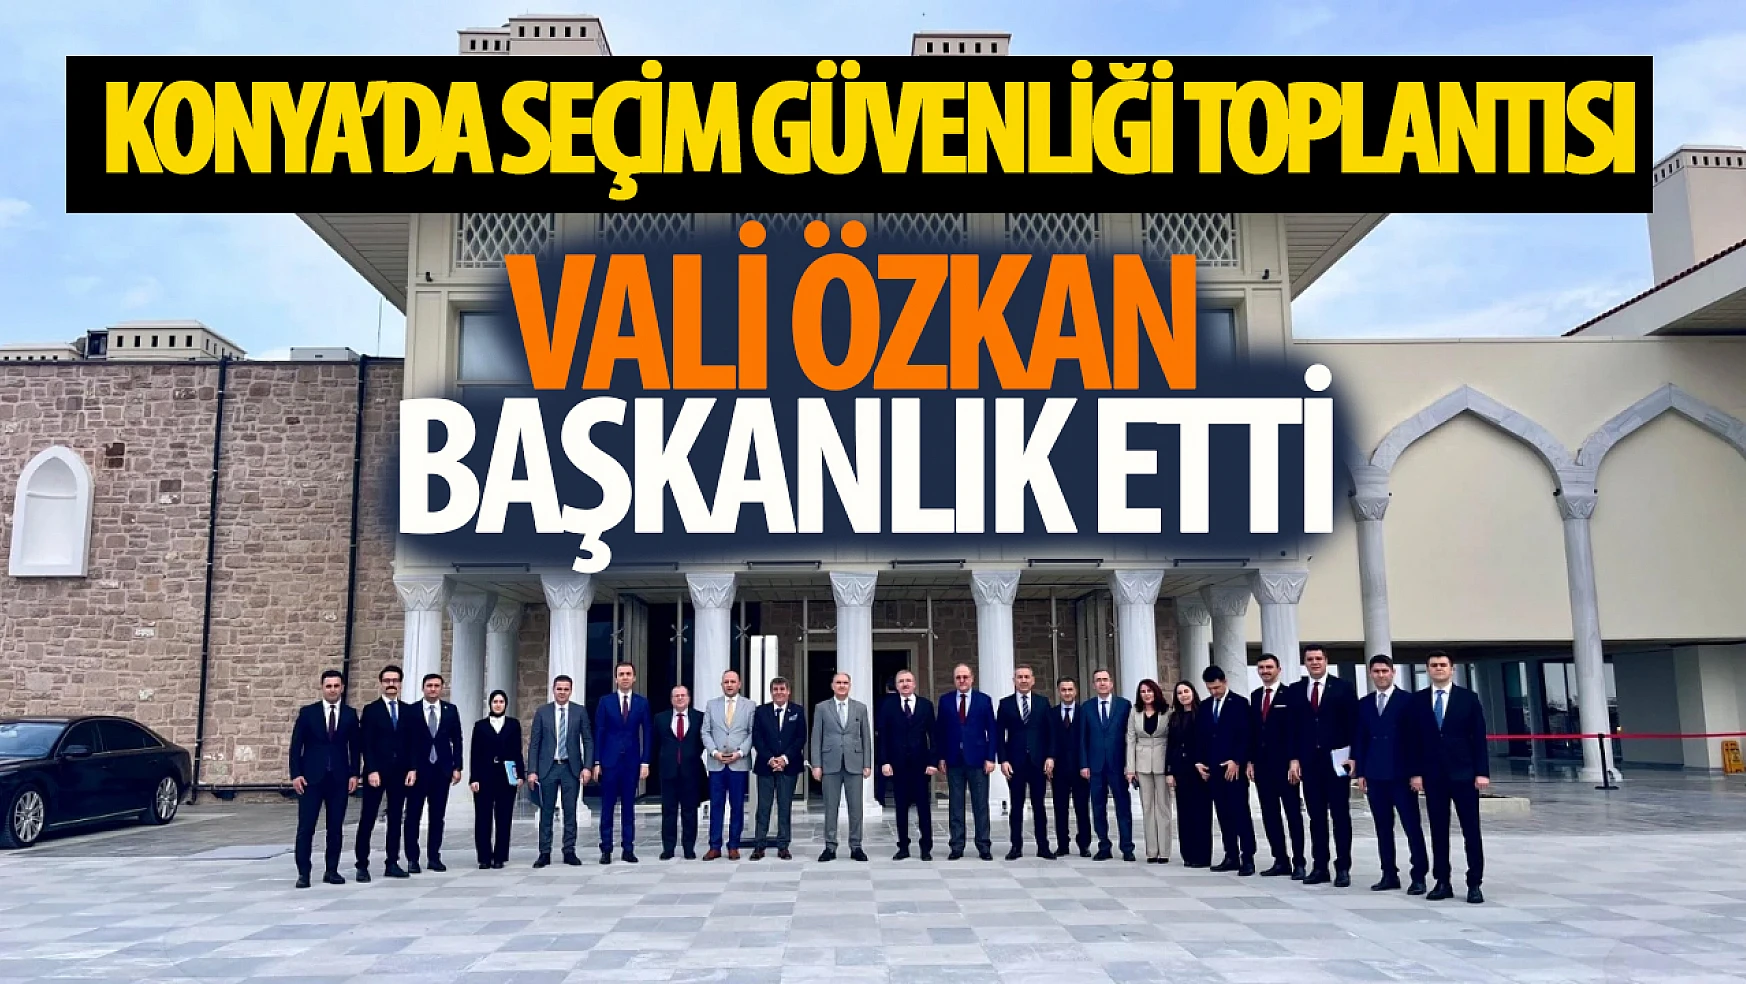 Vali Özkan başkanlık etti